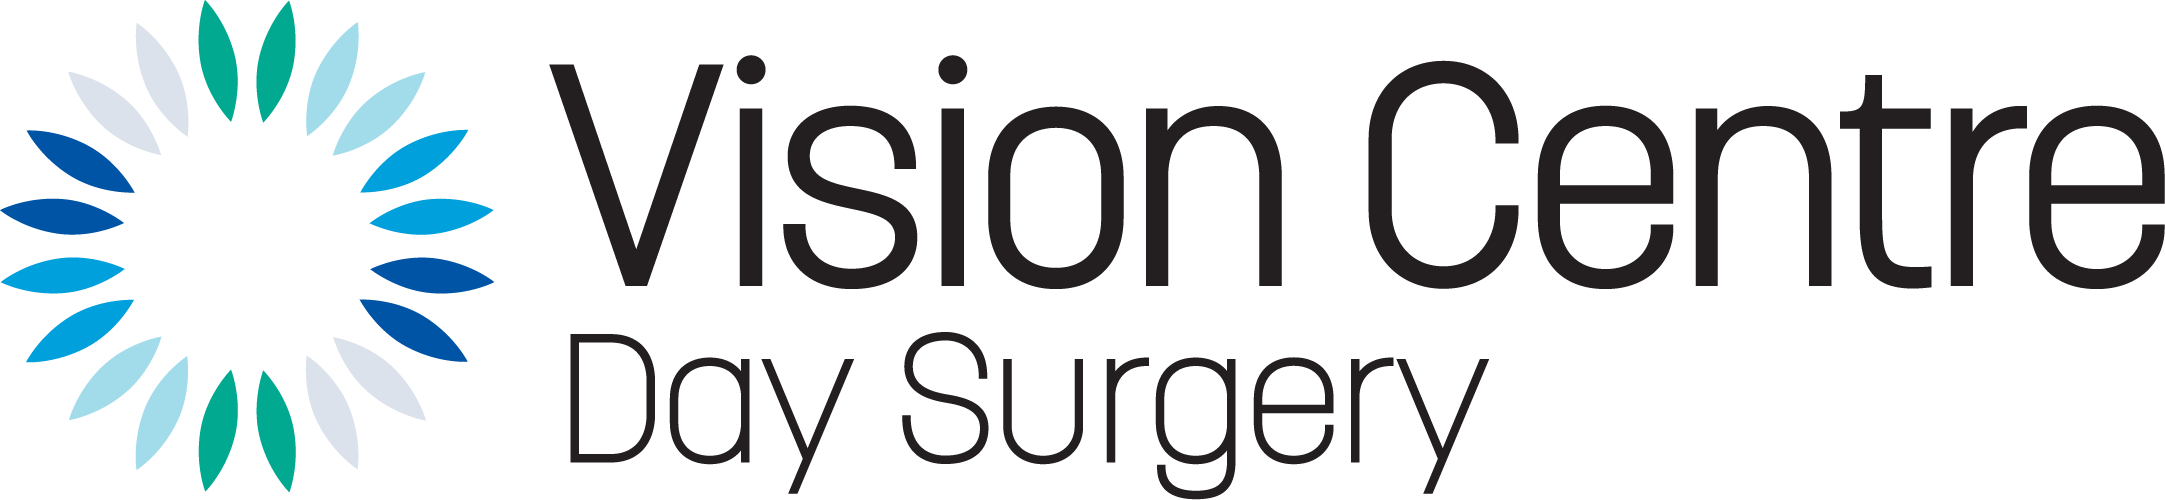 Vision Centre Day Surgery logo (Gold Coast, QLD)